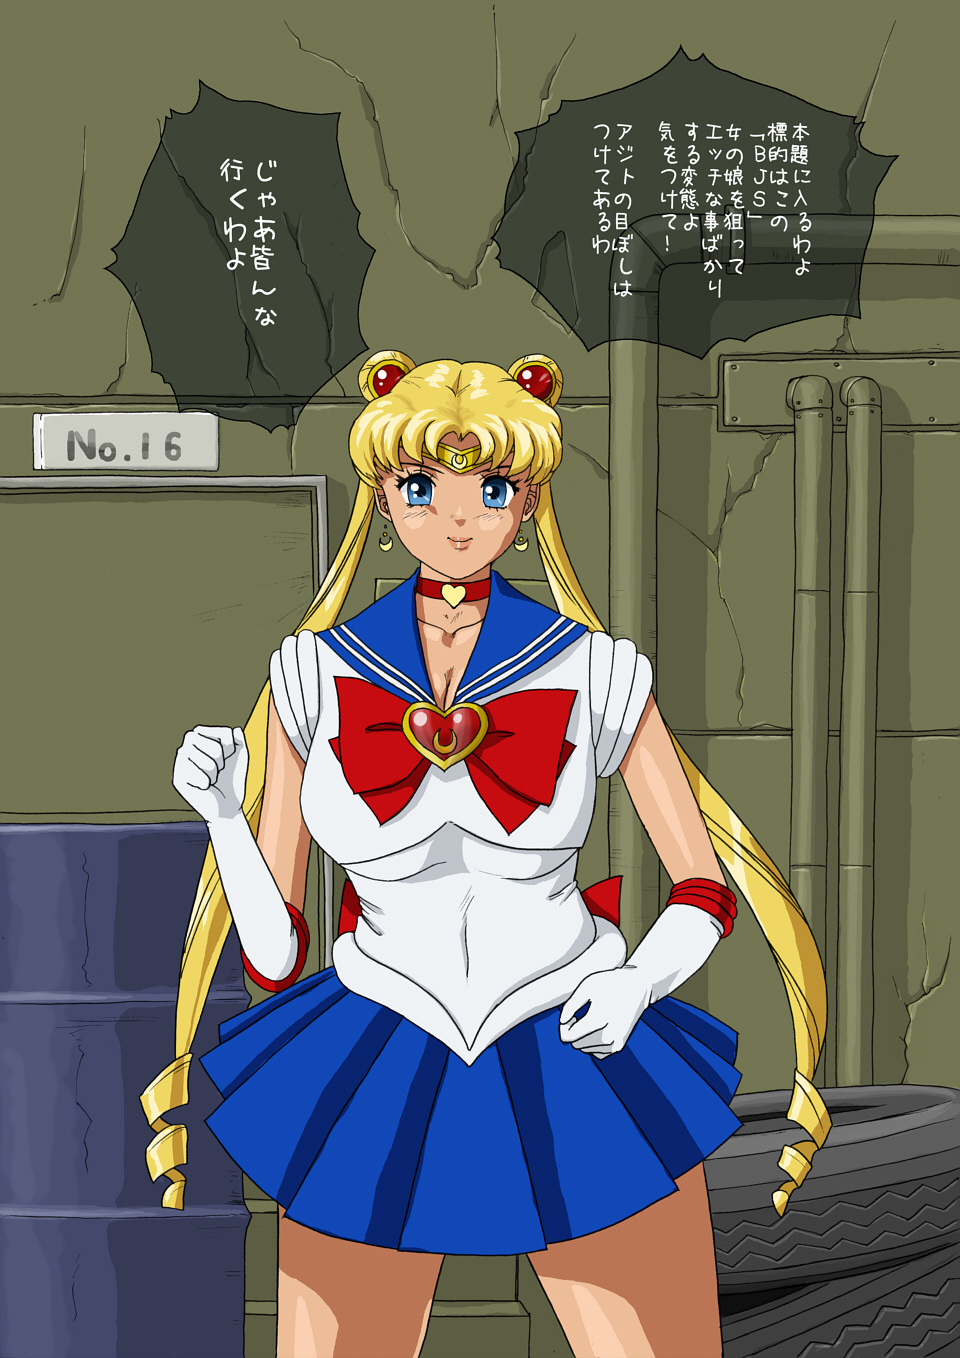 Read No Ji Club Wakusei No Yume Gesshoku Sailor Moon Hentai Porns Manga And Porncomics Xxx